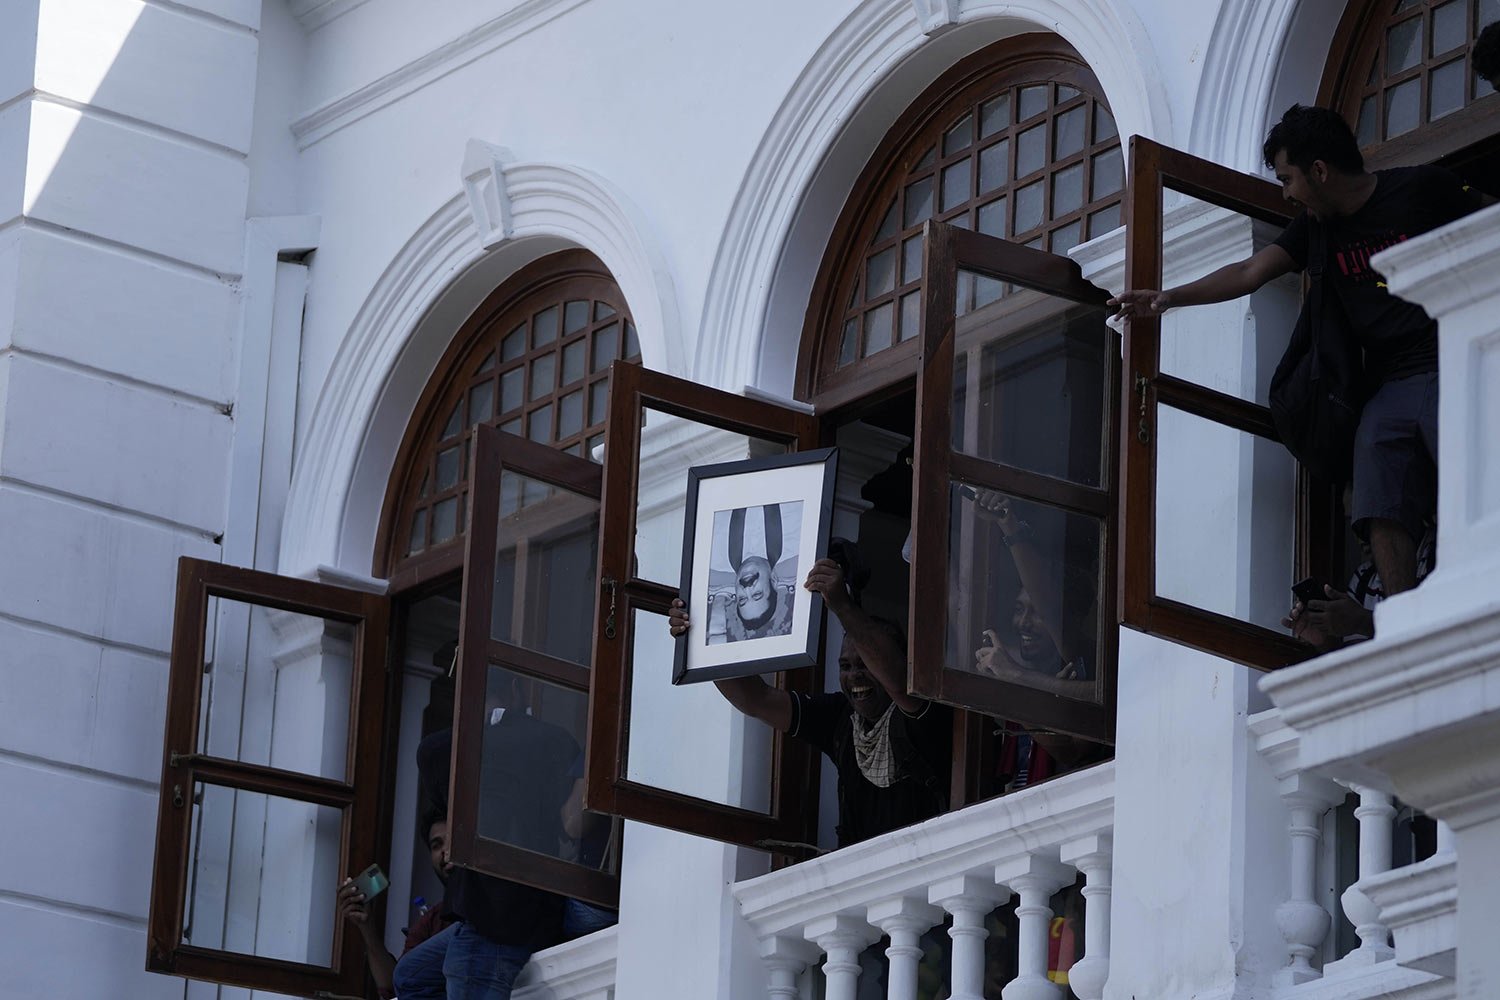  A protester holds a portrait of Sri Lankan Prime Minister Mahinda Rajapaksa upside down after storming the office of President Ranil Wickremesinghe, demanding he resign in Colombo, Sri Lanka, July 13, 2022. (AP Photo/Eranga Jayawardena) 